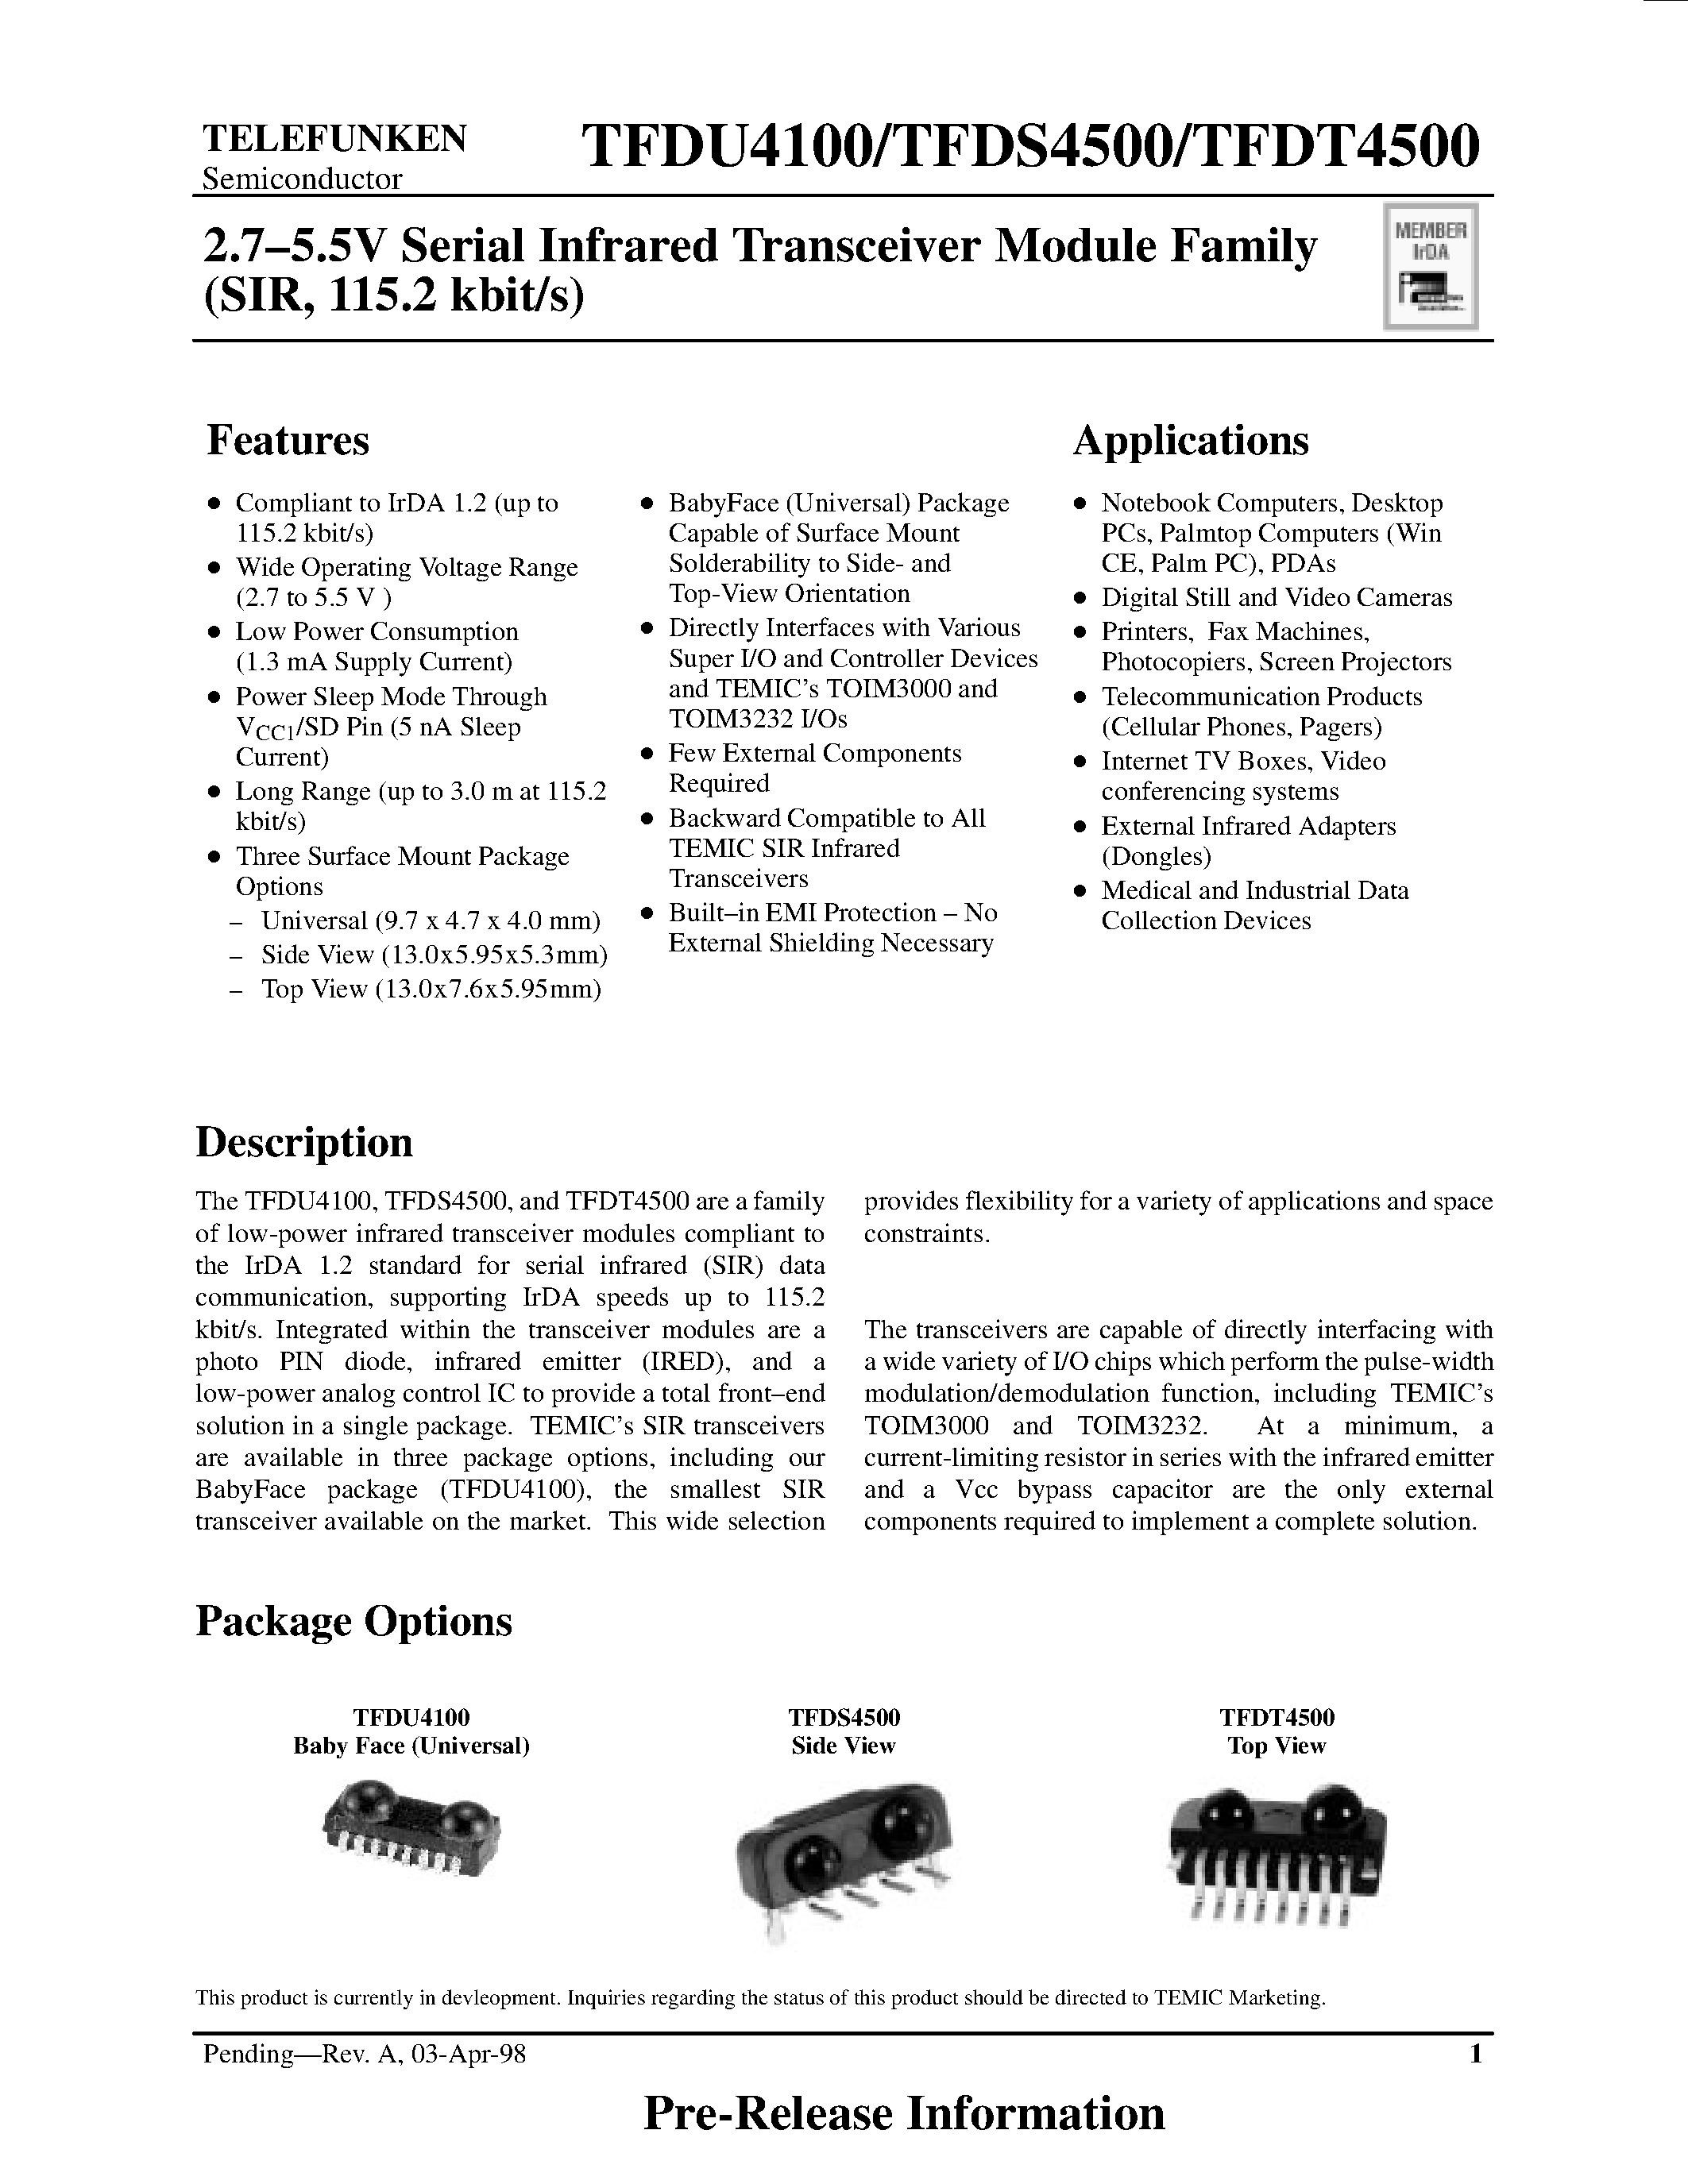 Datasheet TFDT4500 - 2.7-5.5V Serial Infrared Transceiver Module Family page 1